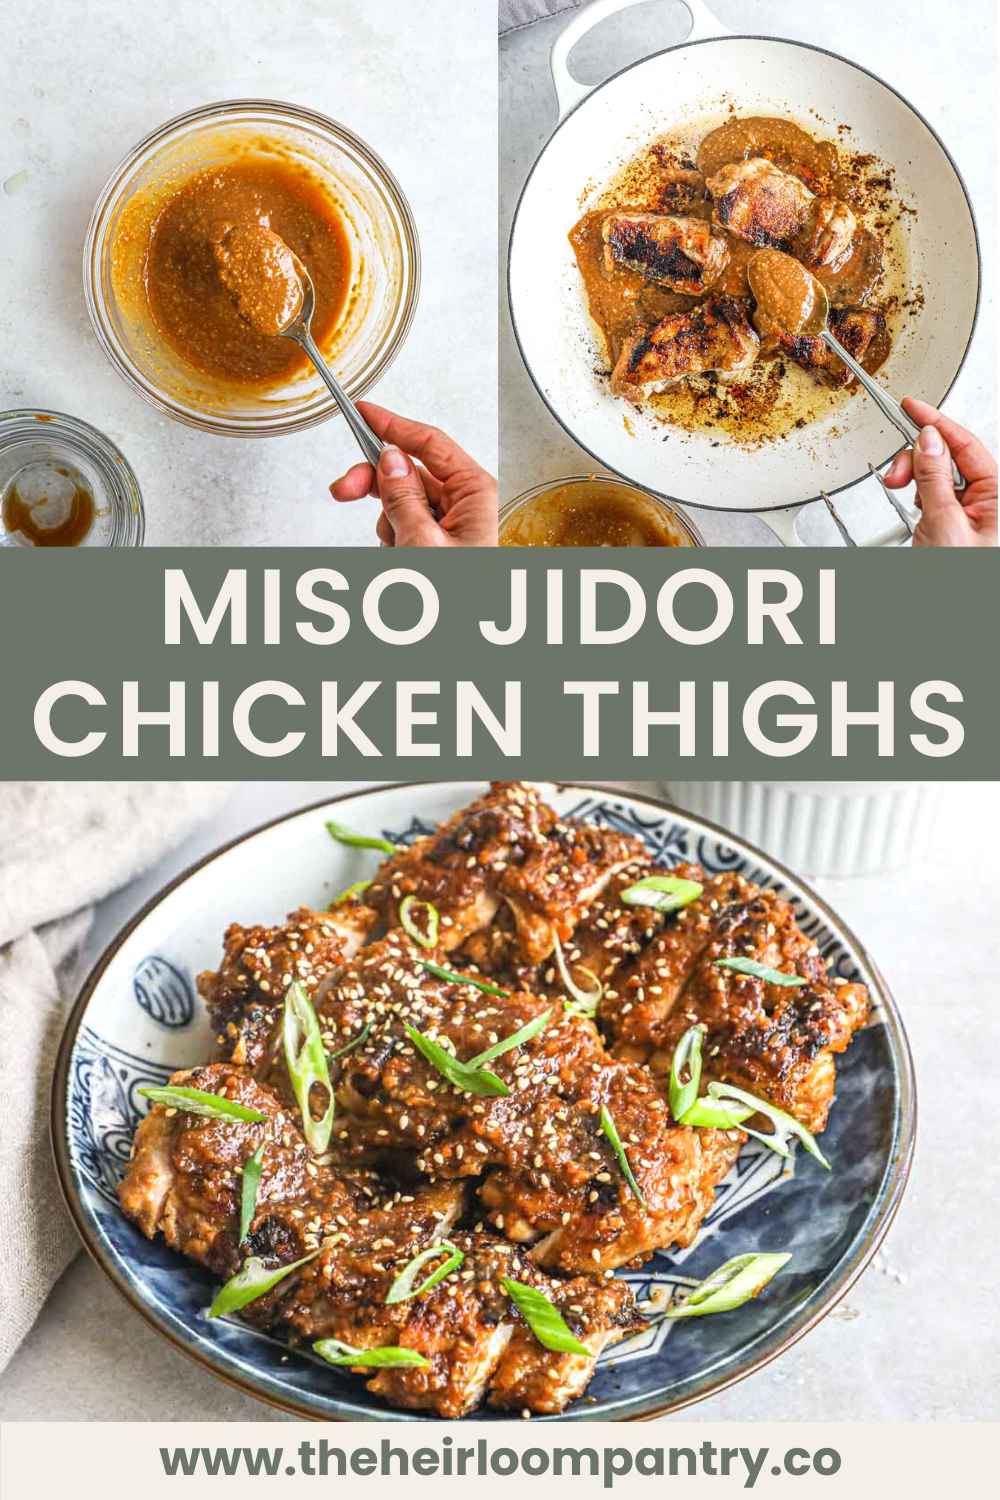 Miso jidori chicken thighs Pinterest pin.